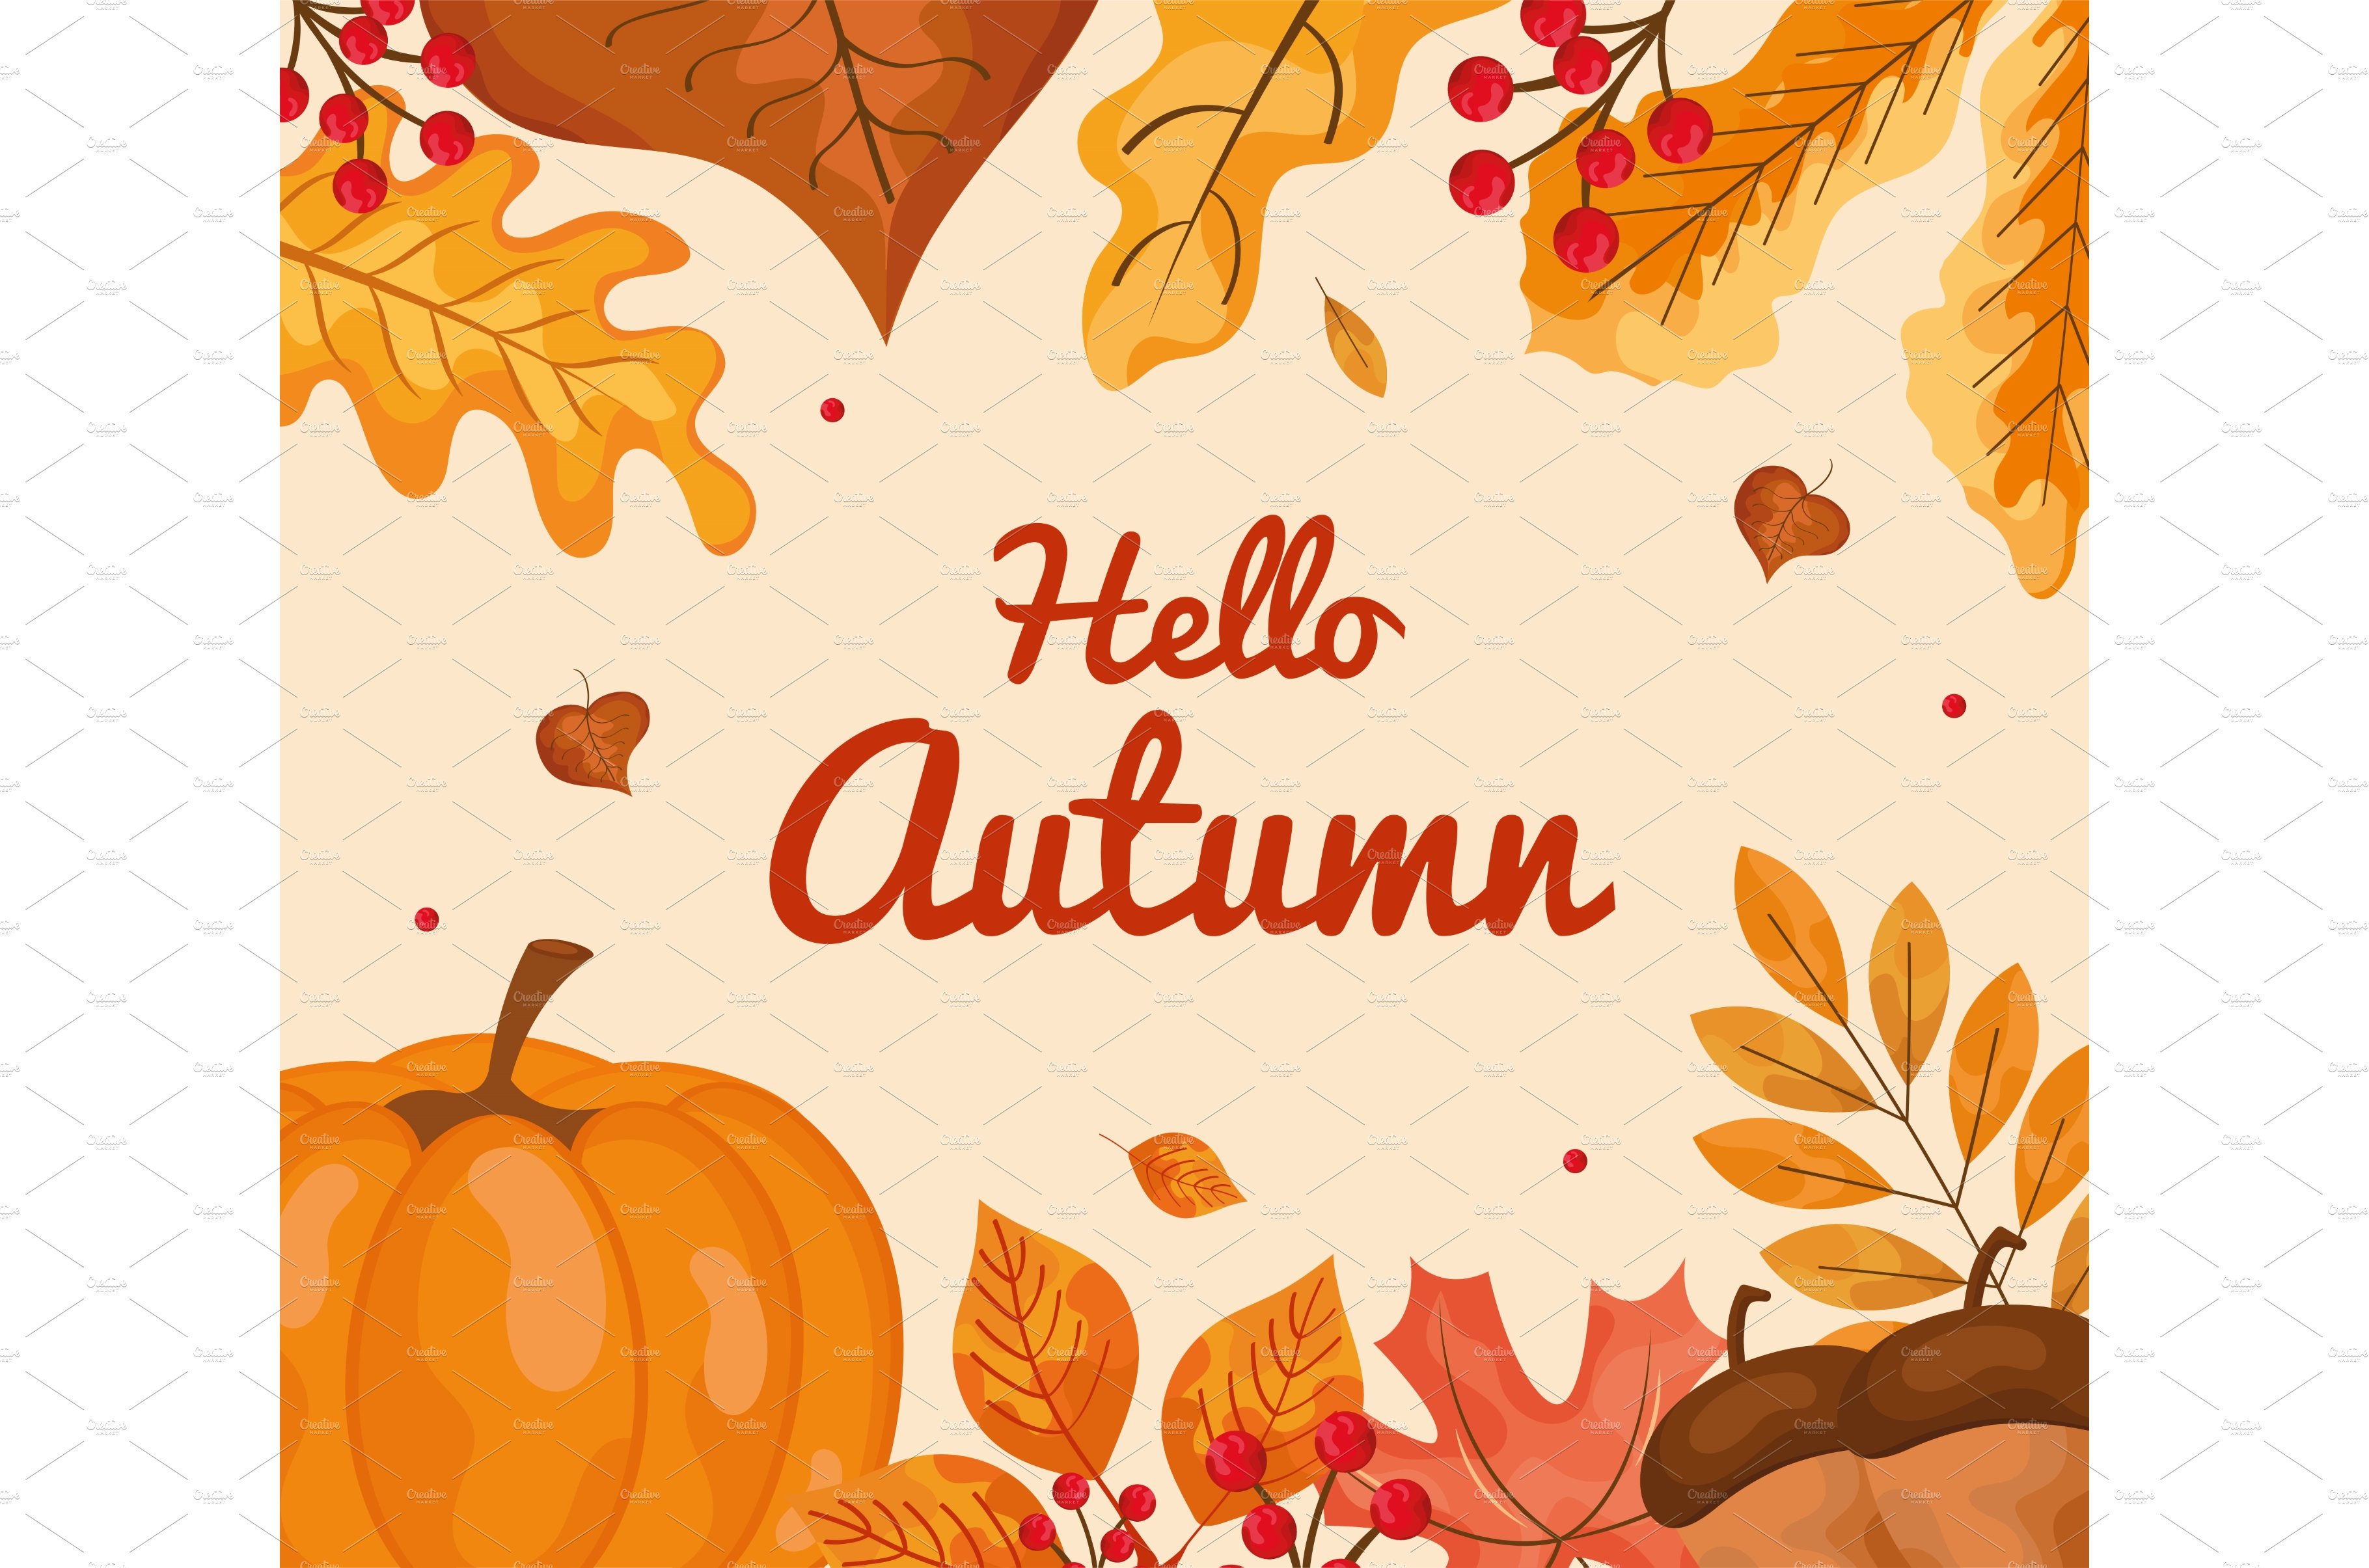 hello autumn season banner cover image.